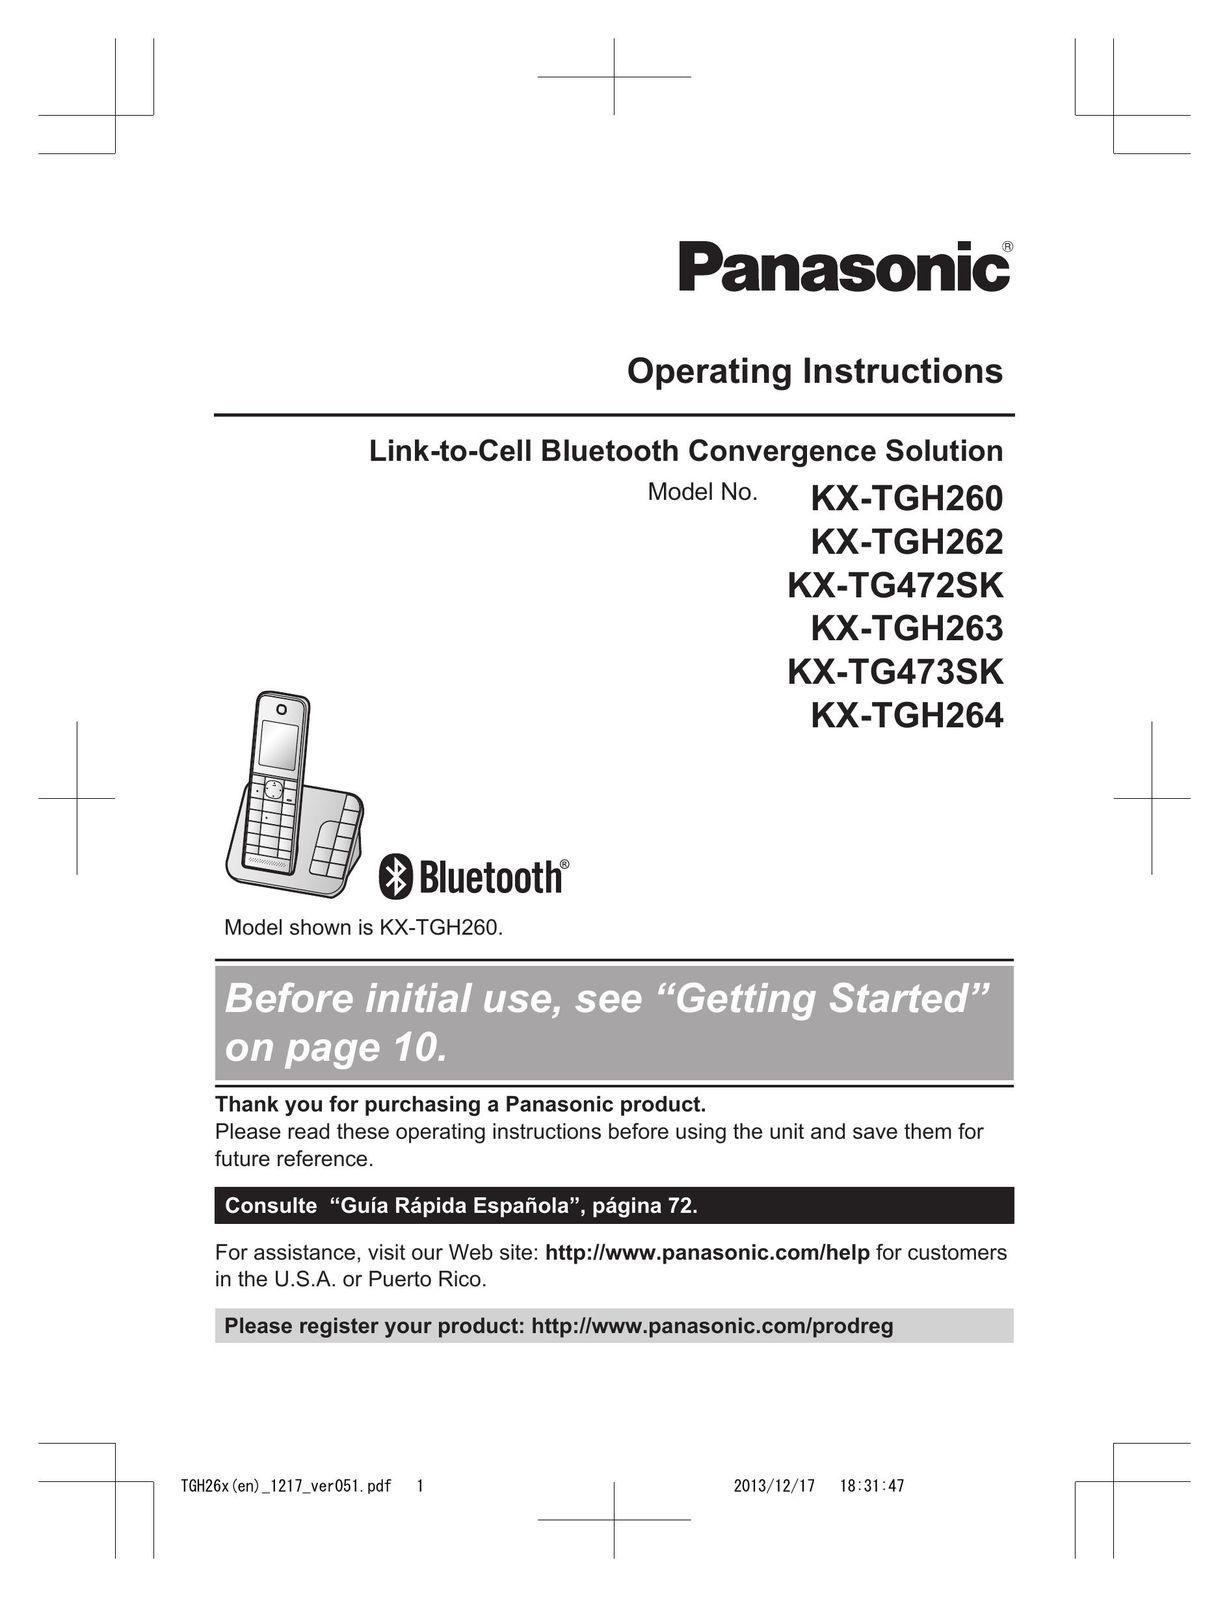 Panasonic KX-TG473SK Tablet Accessory User Manual